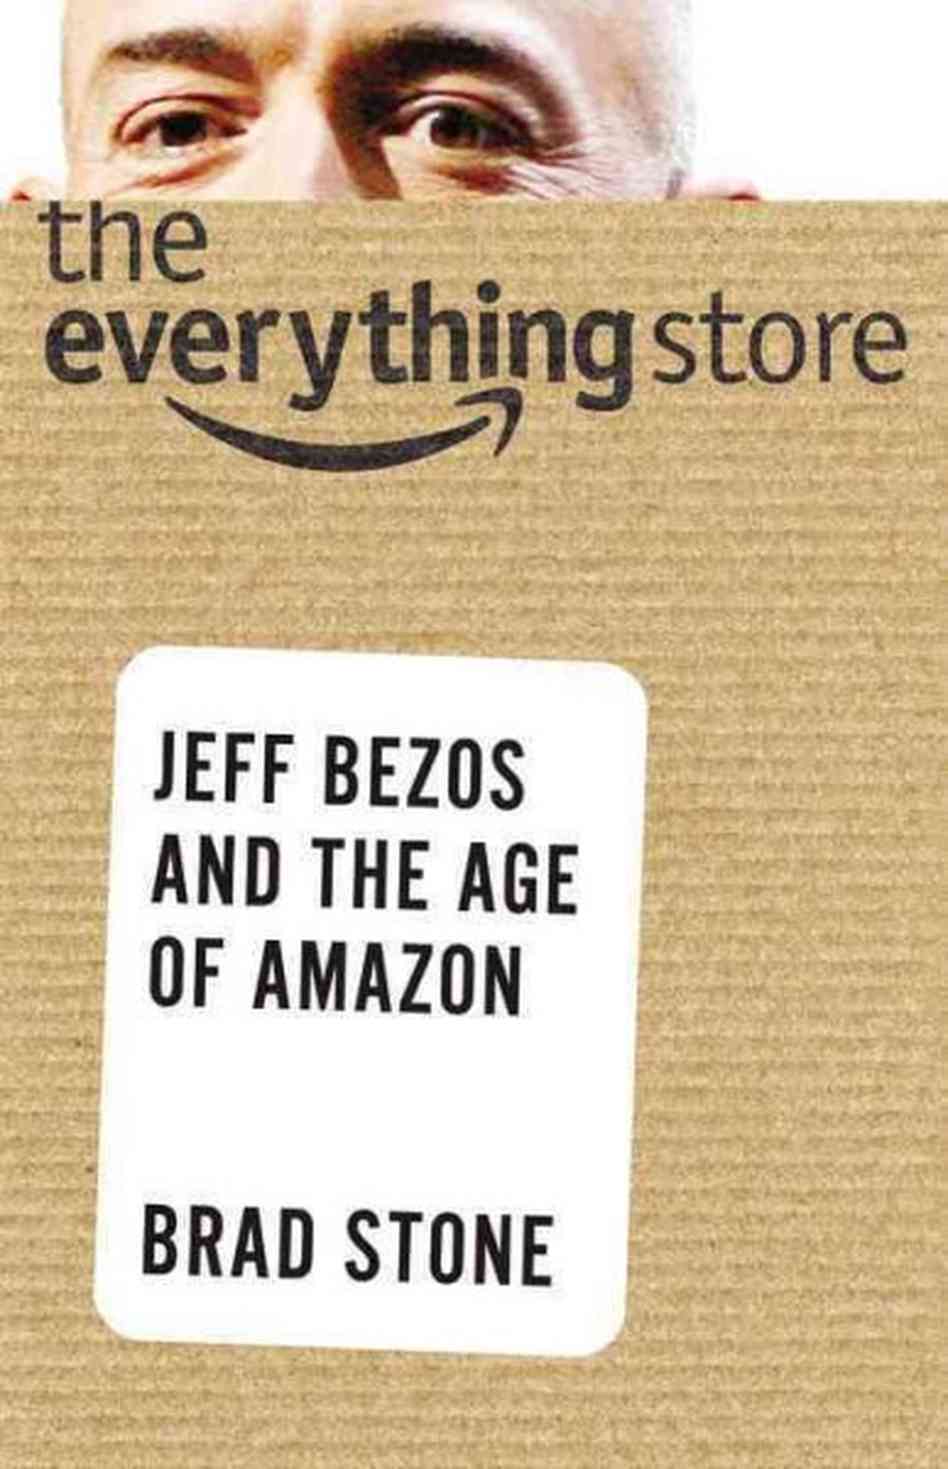 Though Jeff Bezos just bought The Washington Post, he’s notoriously press-averse, favoring